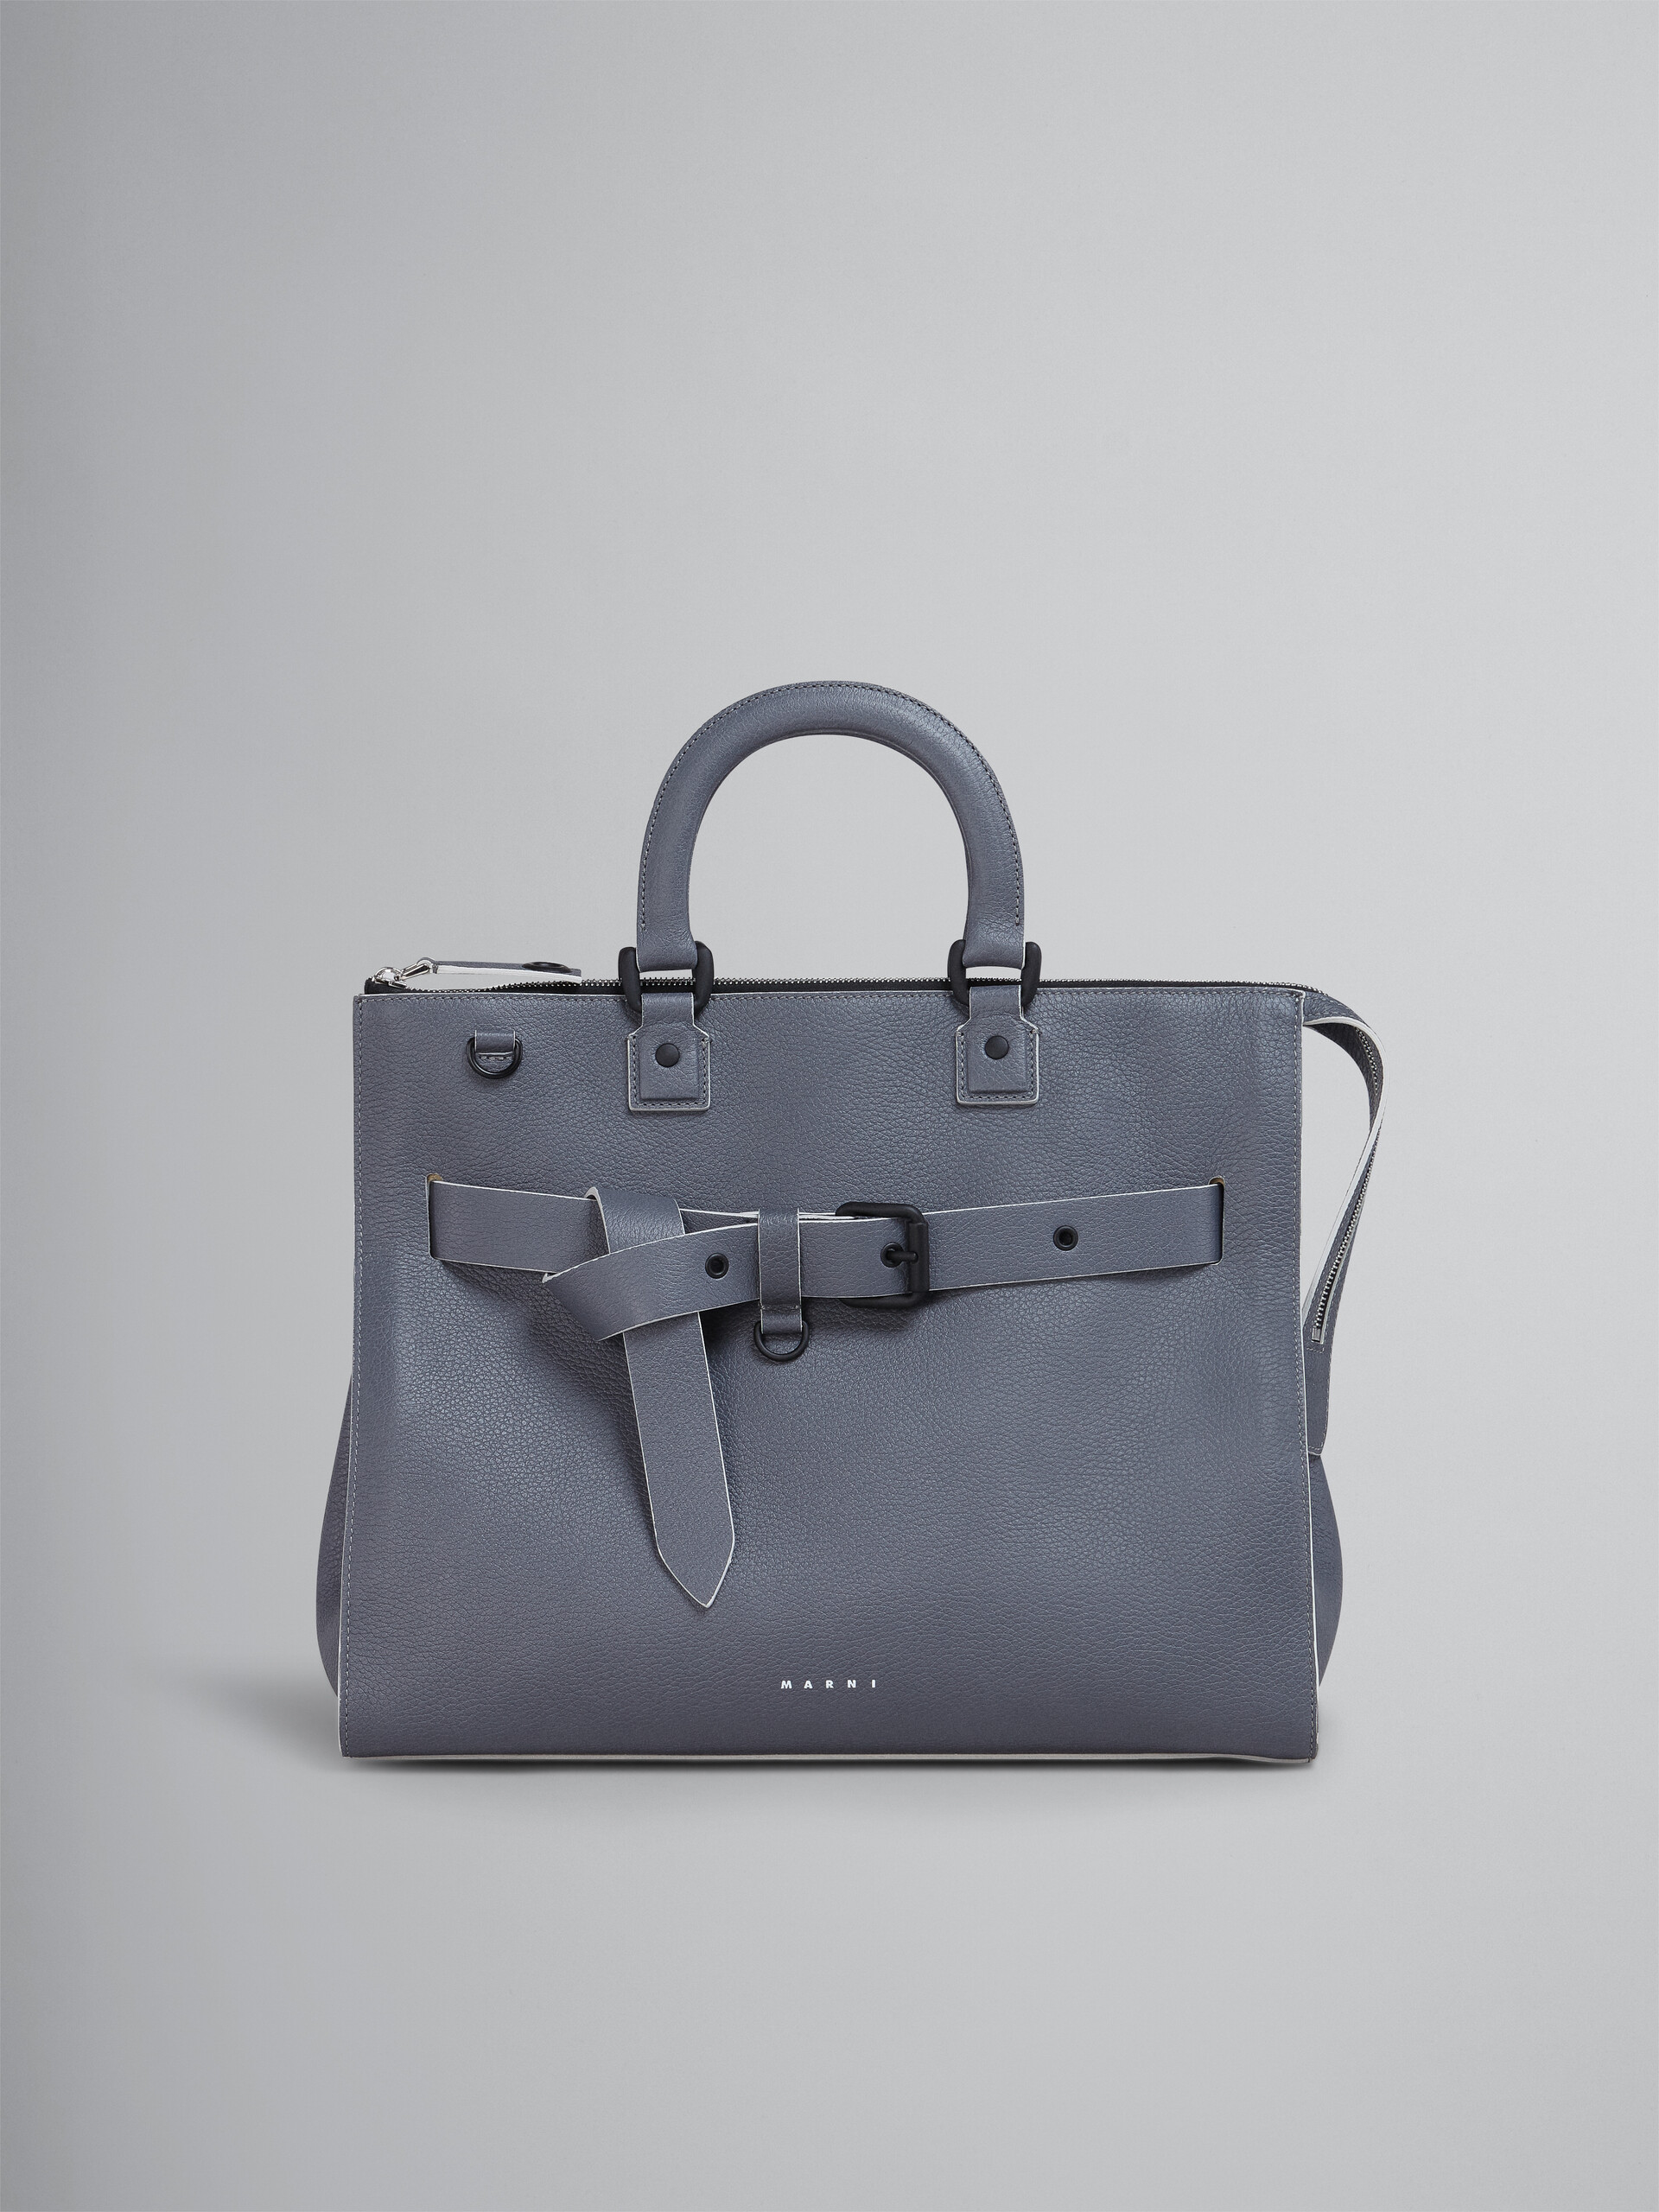 TREASURE bag in grey leather - Handbags - Image 1